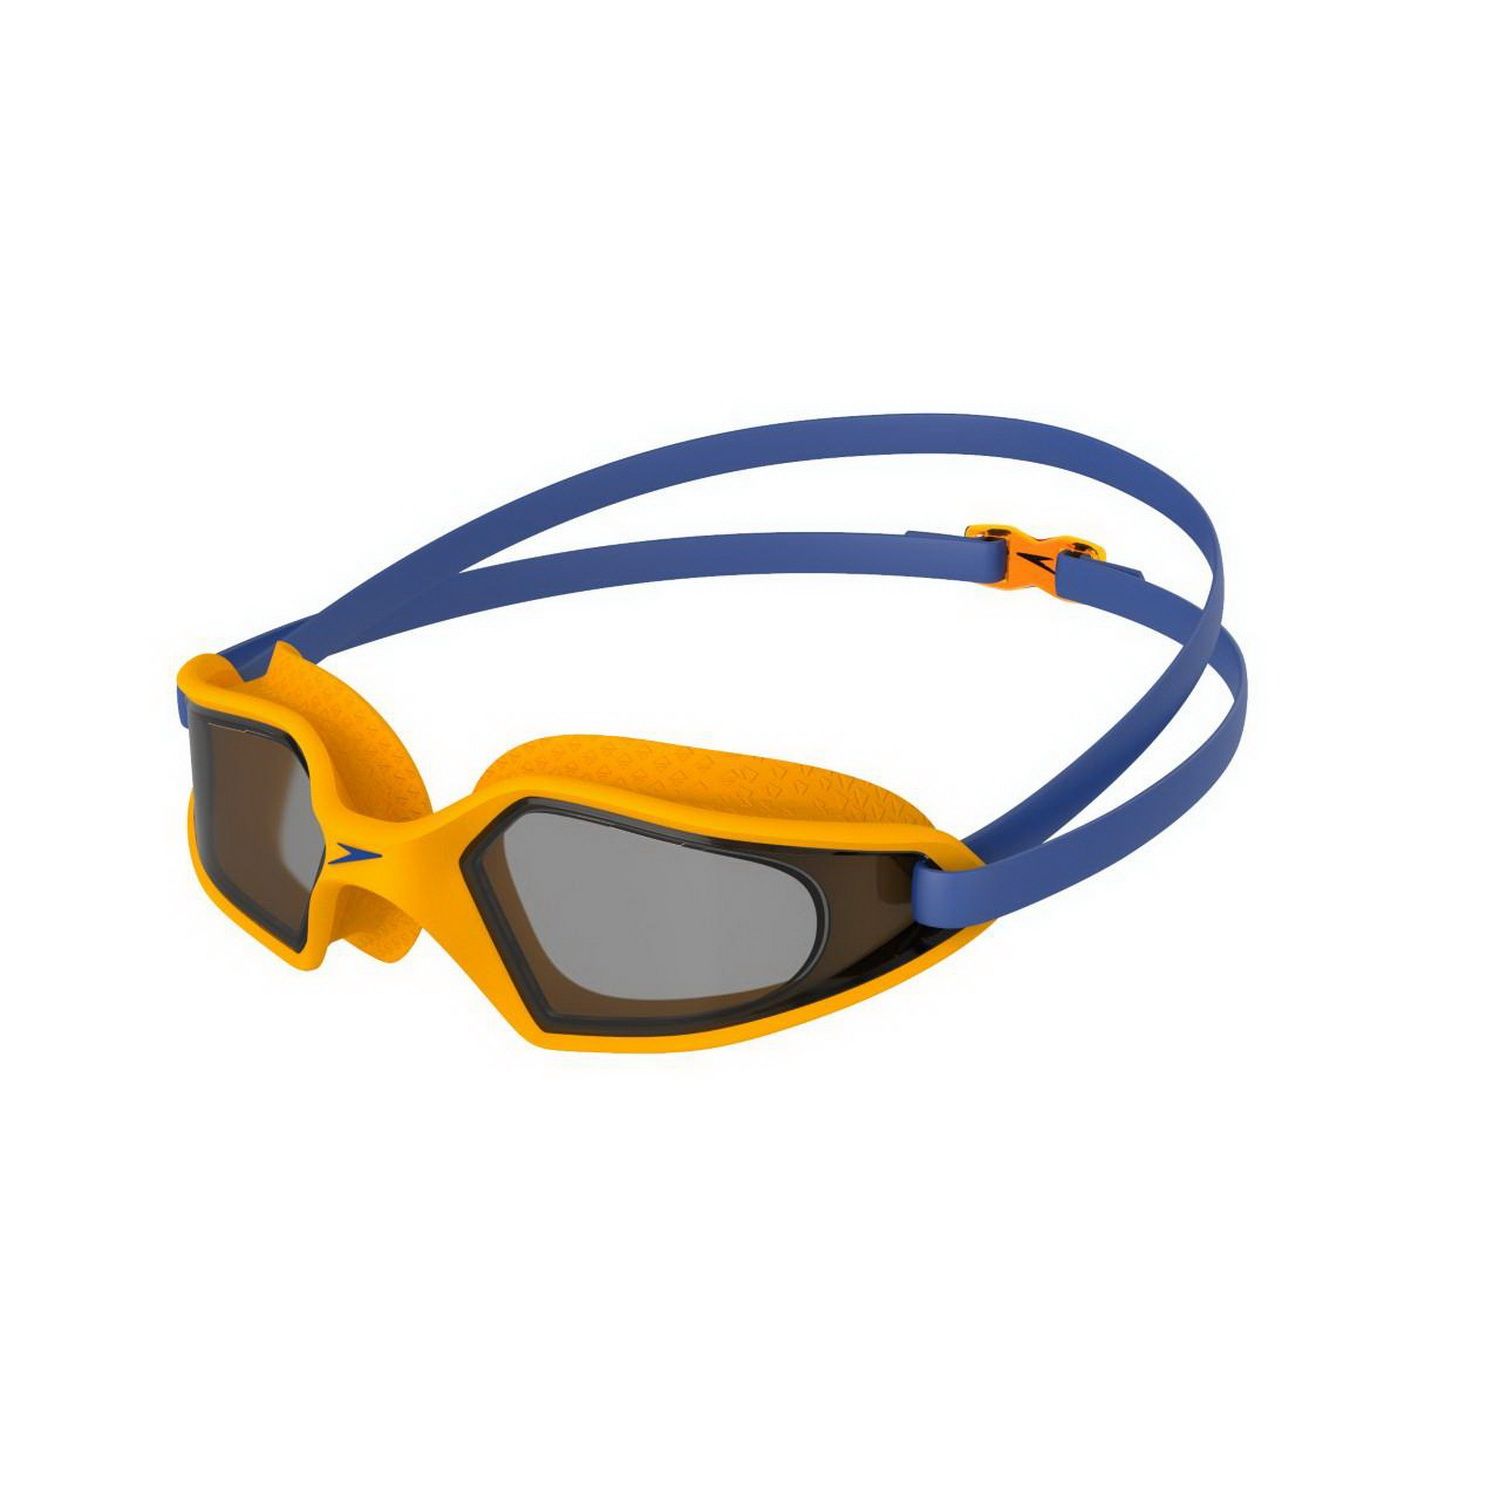 Plavecké okuliare Hydropulse Junior modrá / oranžová